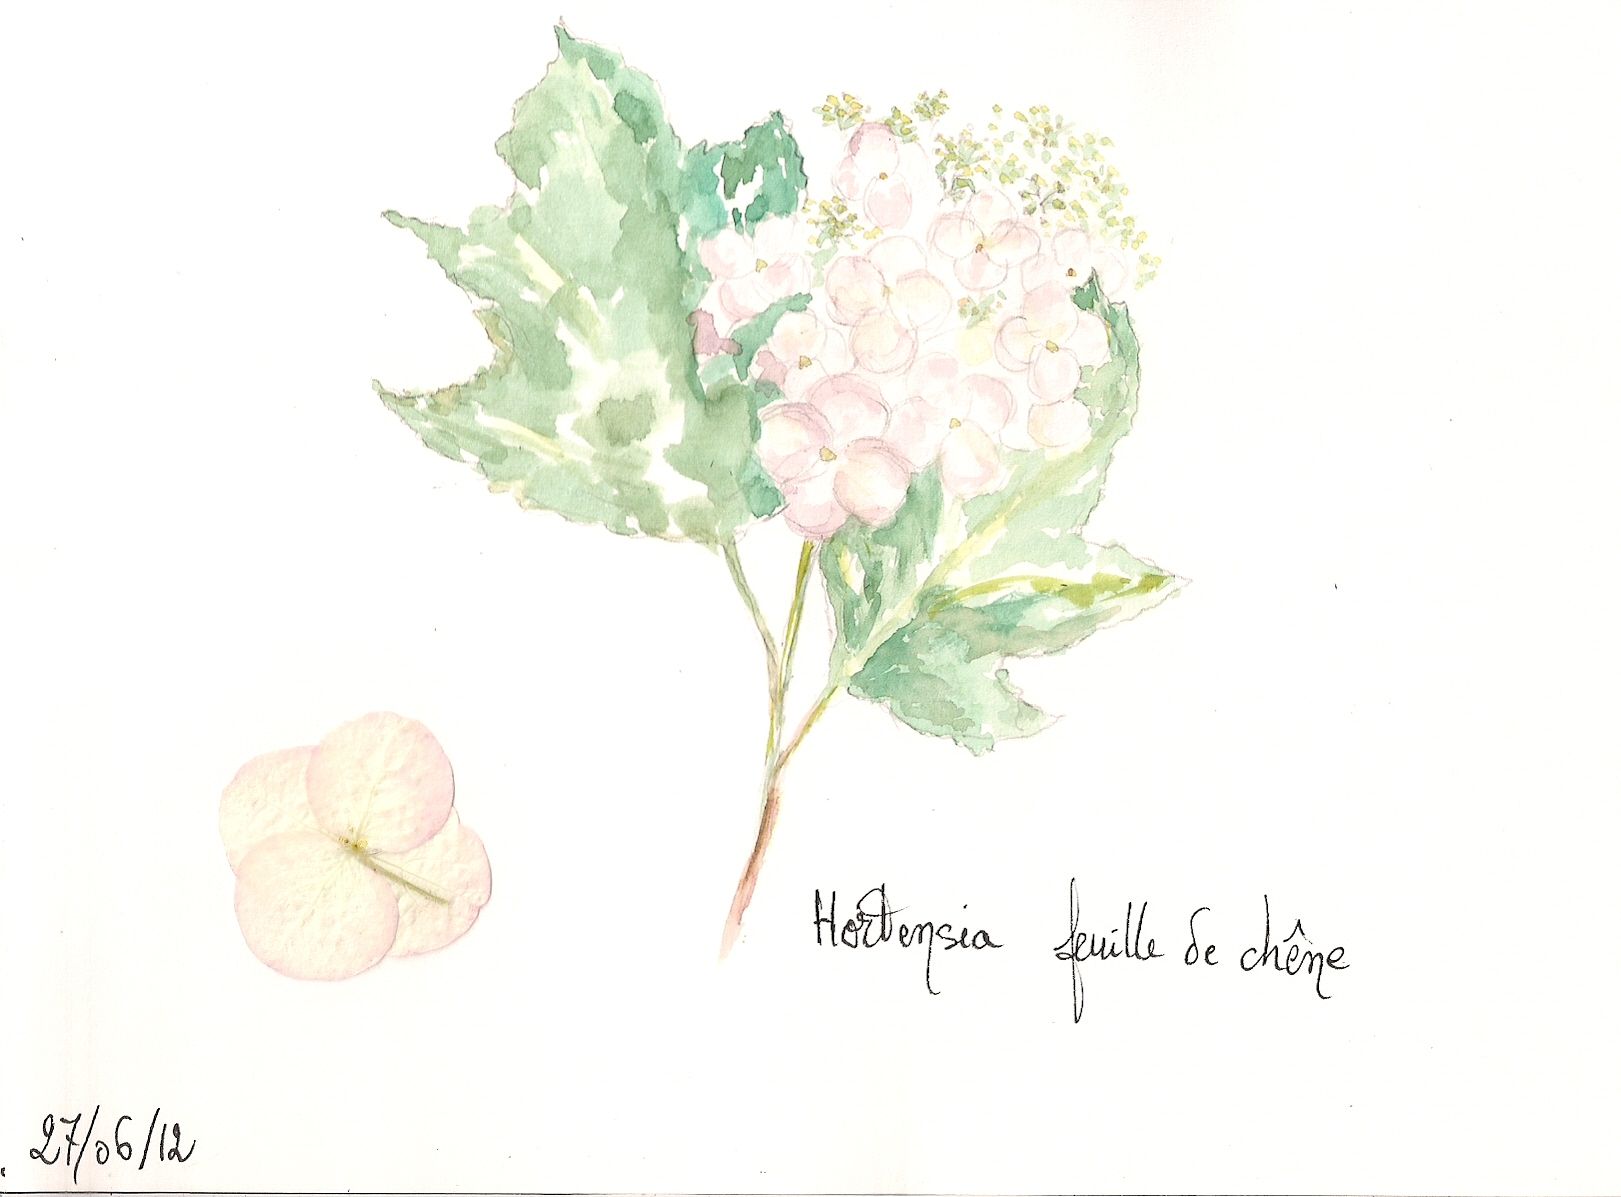 Hortensia feuille de chêne